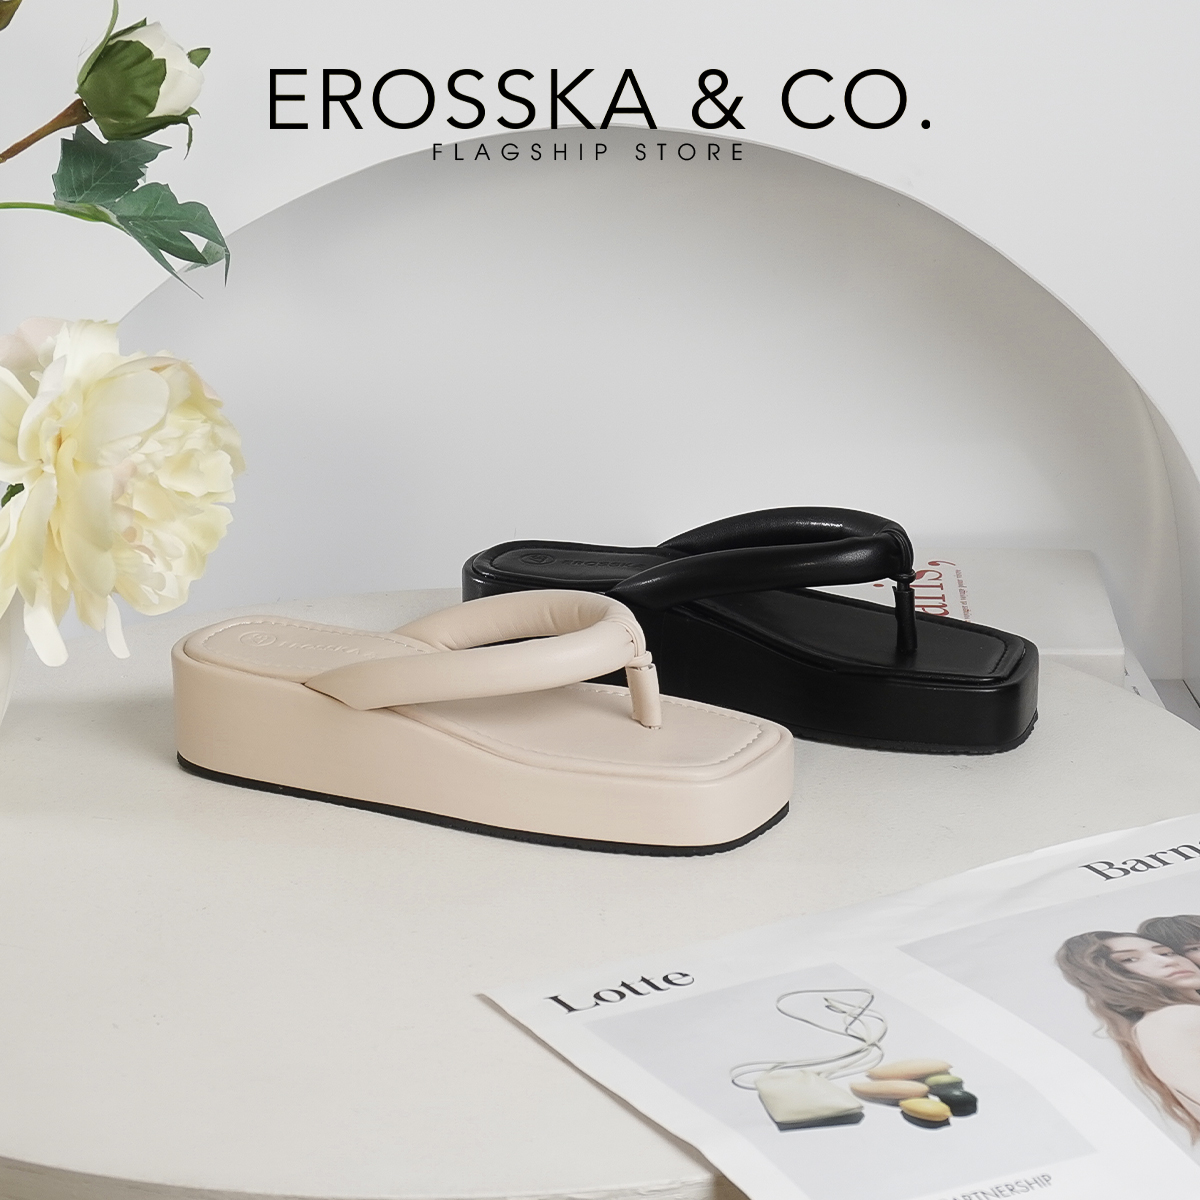 Erosska - Dép kẹp thời trang quai tròn siêu êm - SB019